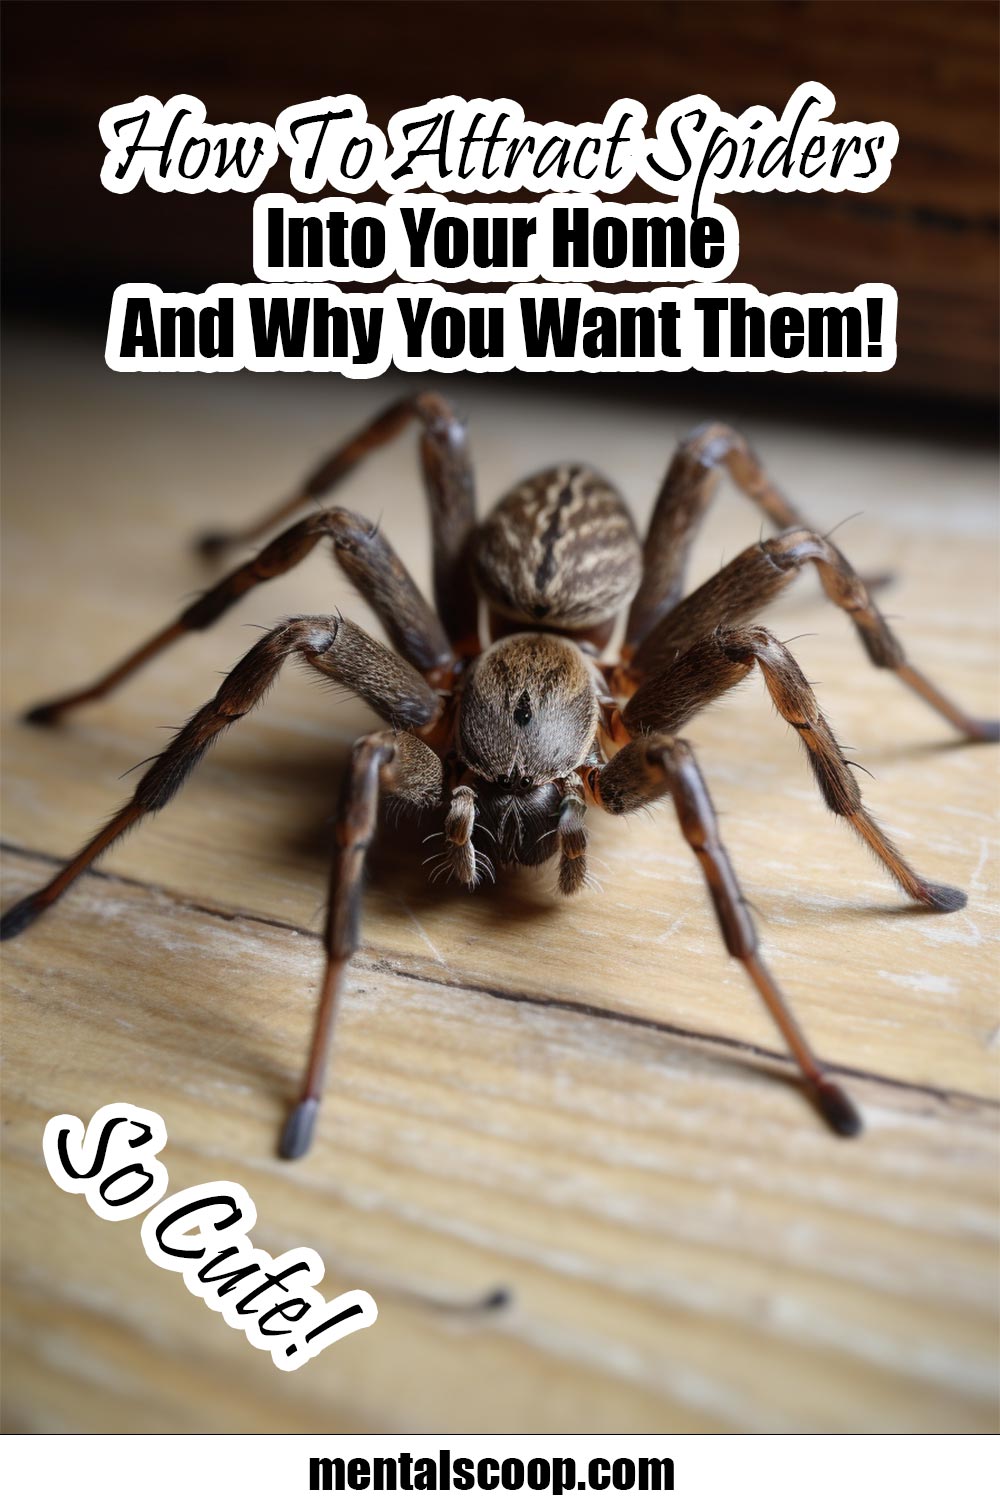 misunderstood house spider meme